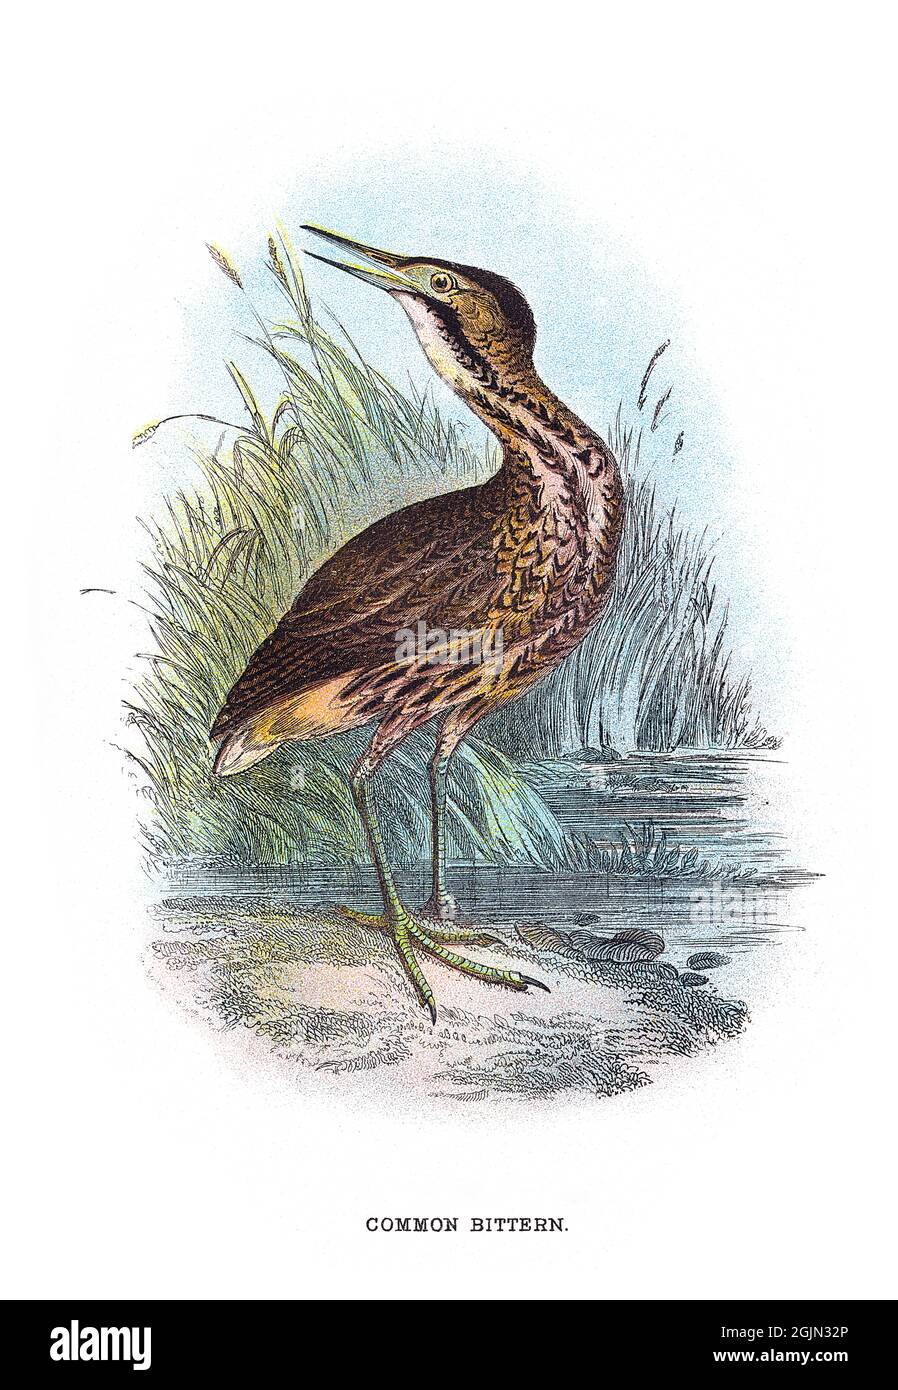 The Eurasian bittern or great bittern, Botaurus stellaris, is a wading bird in the bittern subfamily, Botaurinae of the heron family Ardeidae. Stock Photo